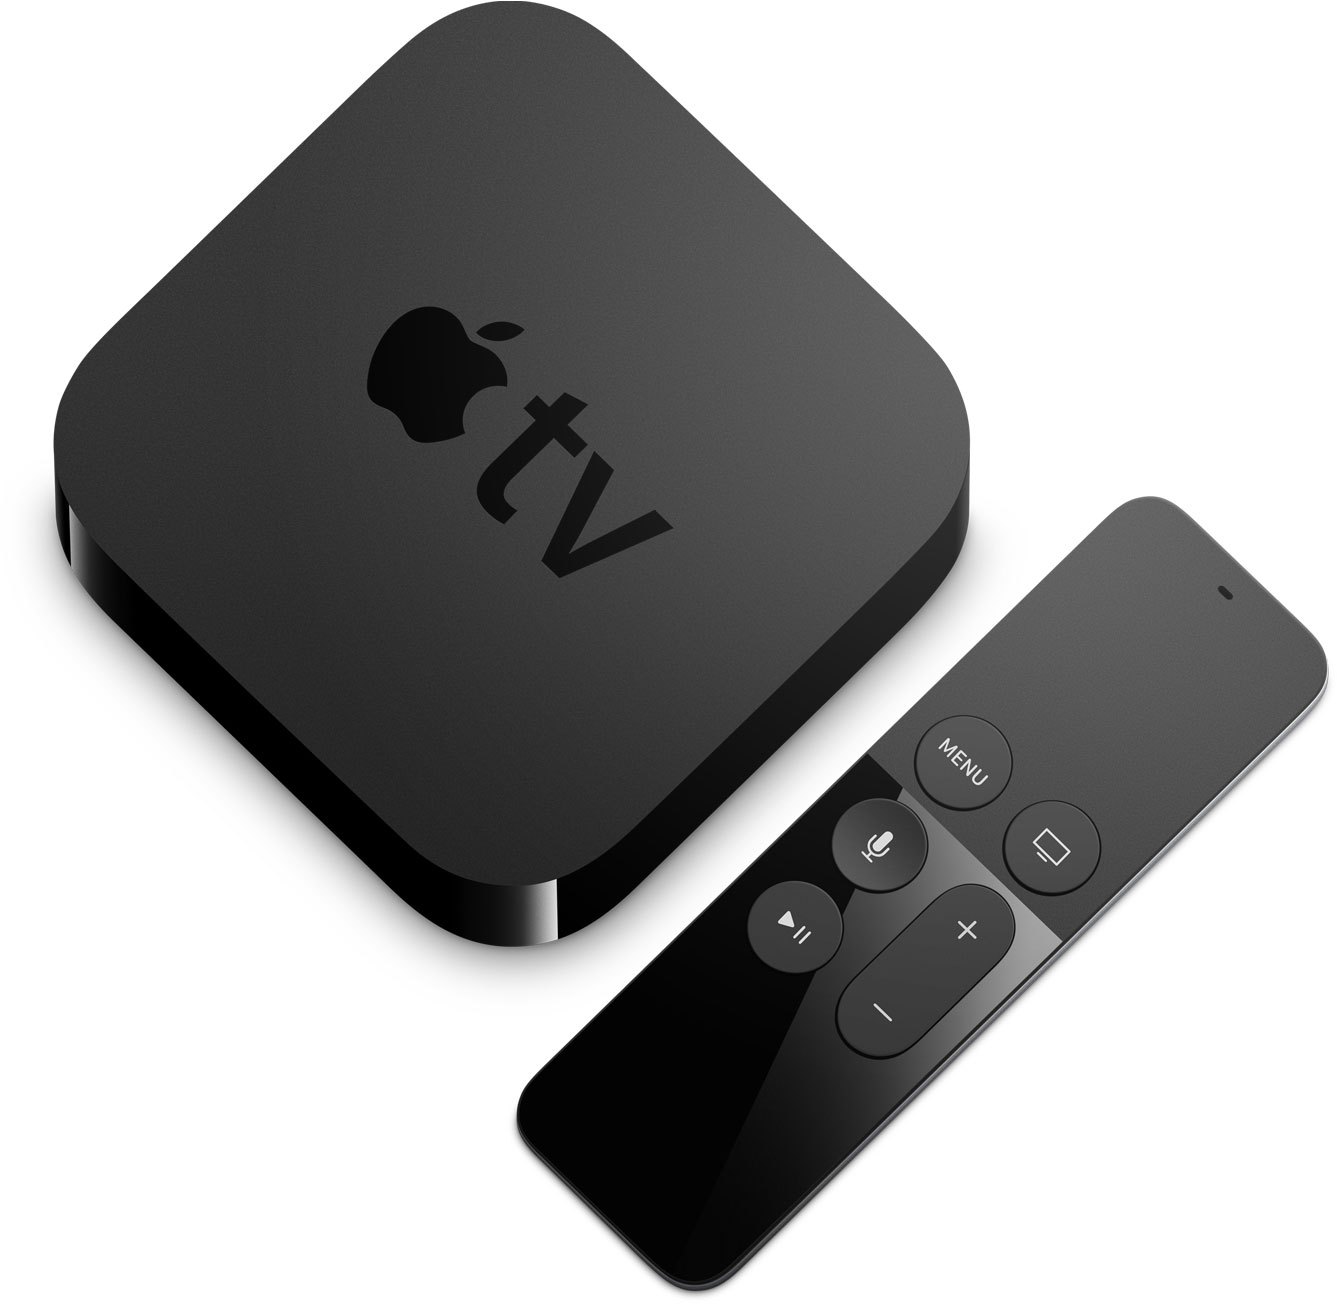 New Apple TV with App Store, Siri & tvOS unveiled - FlatpanelsHD